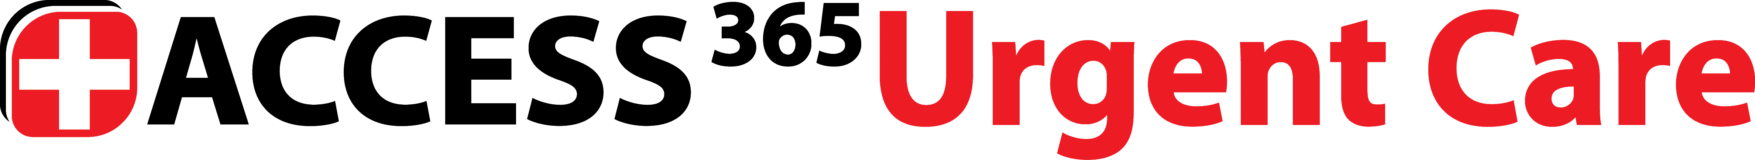 access365 urgentcare logo retina